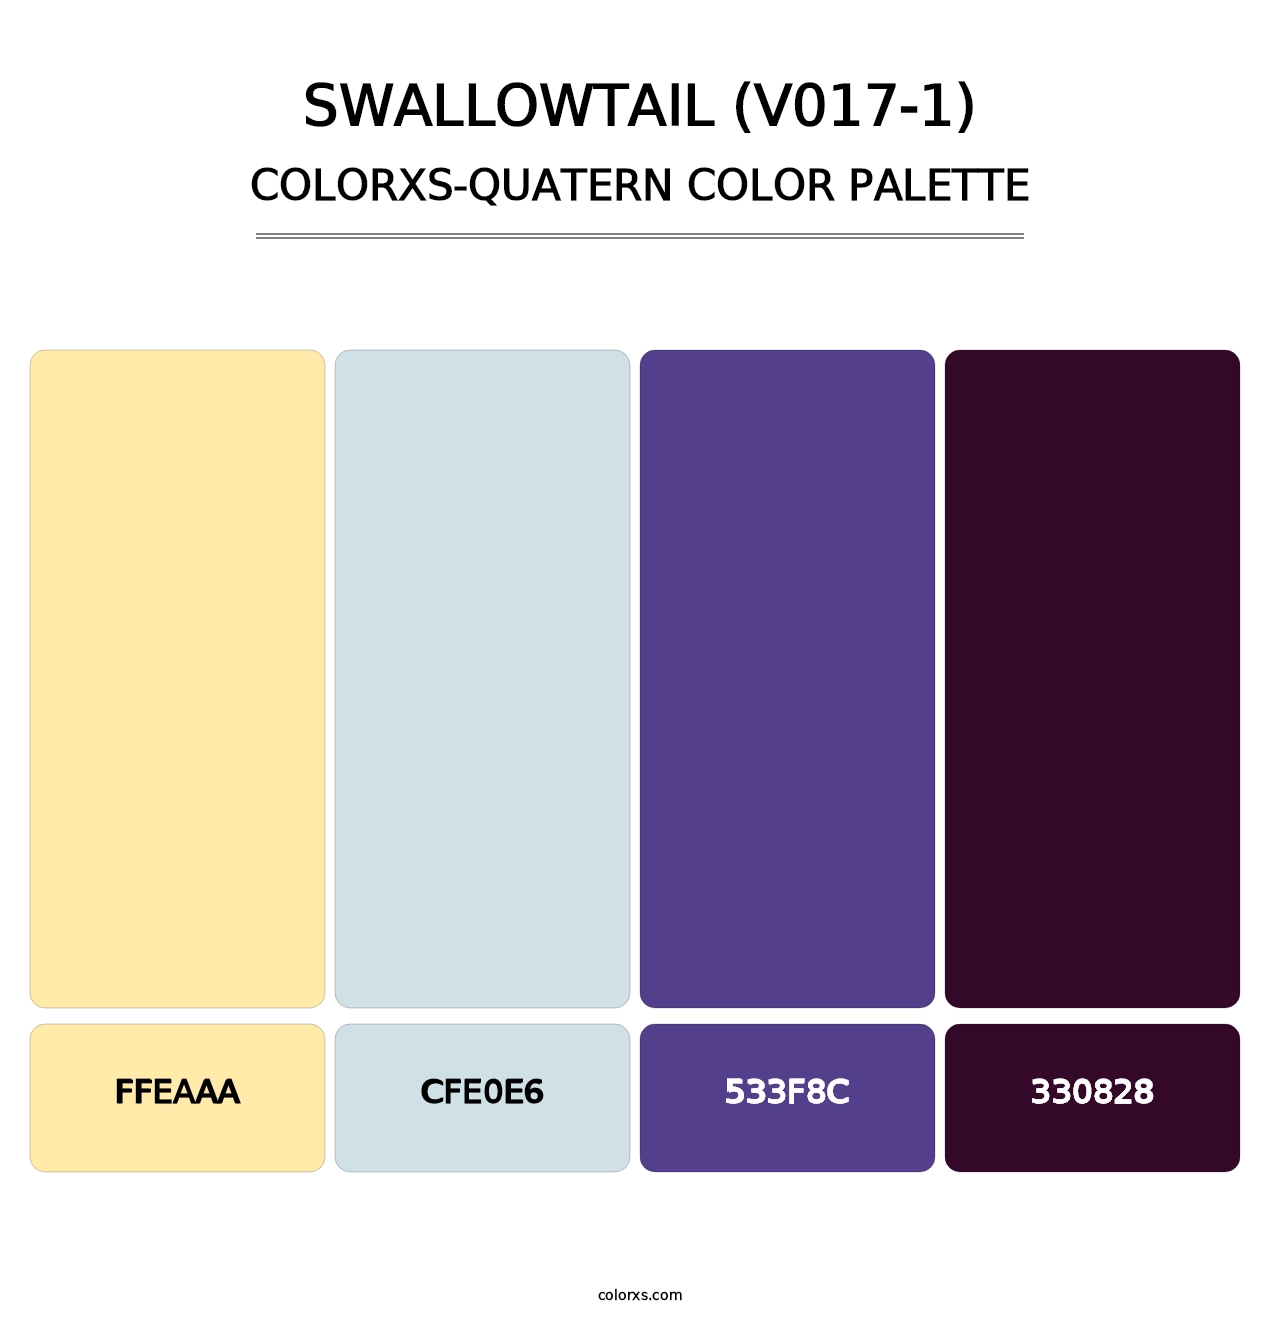 Swallowtail (V017-1) - Colorxs Quatern Palette